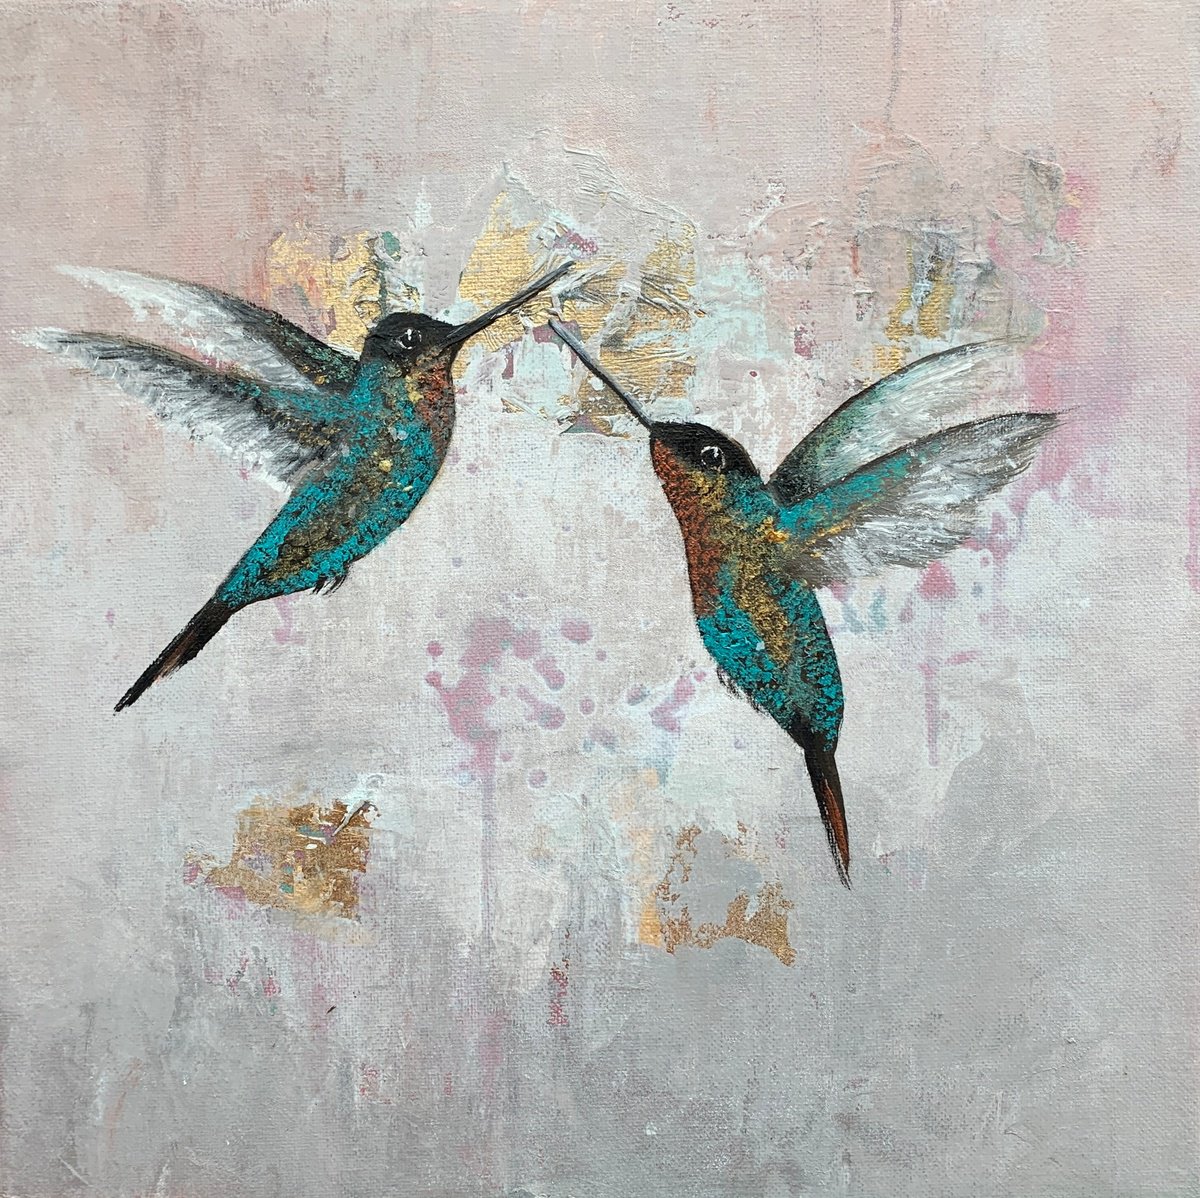 Love Birds ~ Hummingbirds in Flight by Laure Bury